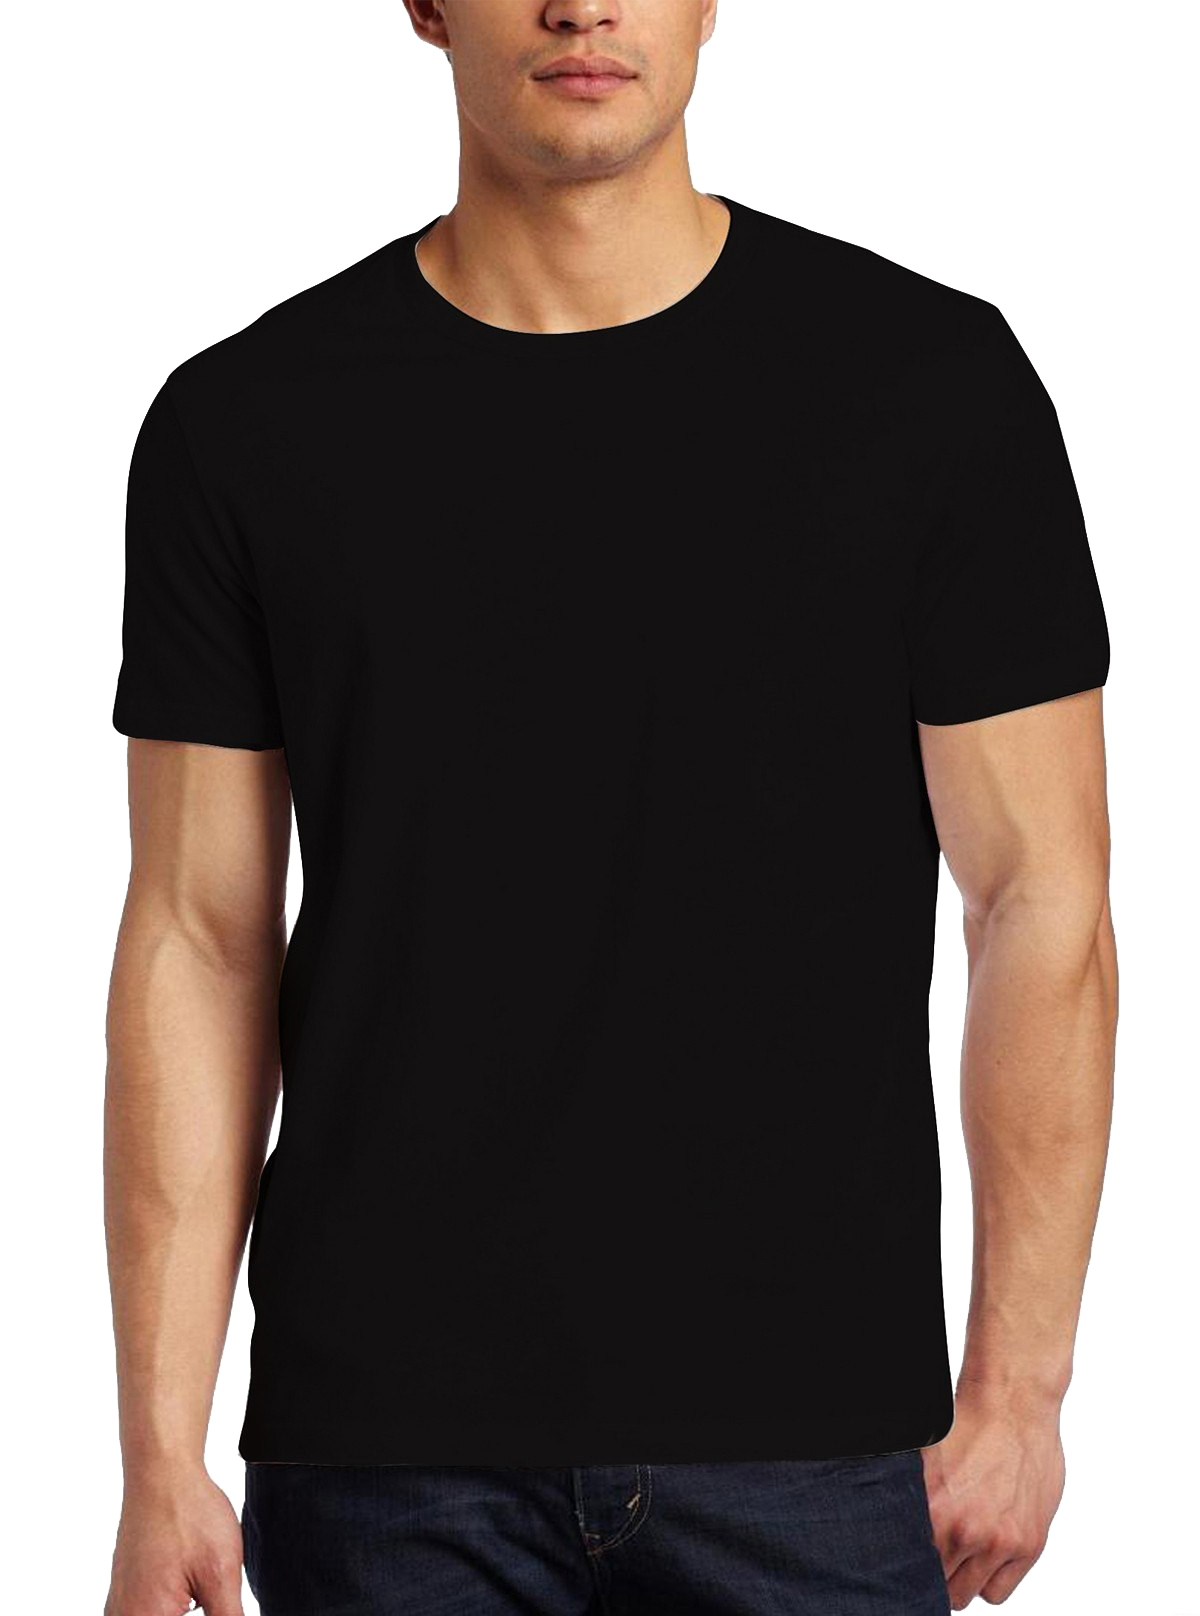 Black T-Shirt PNG Image Background